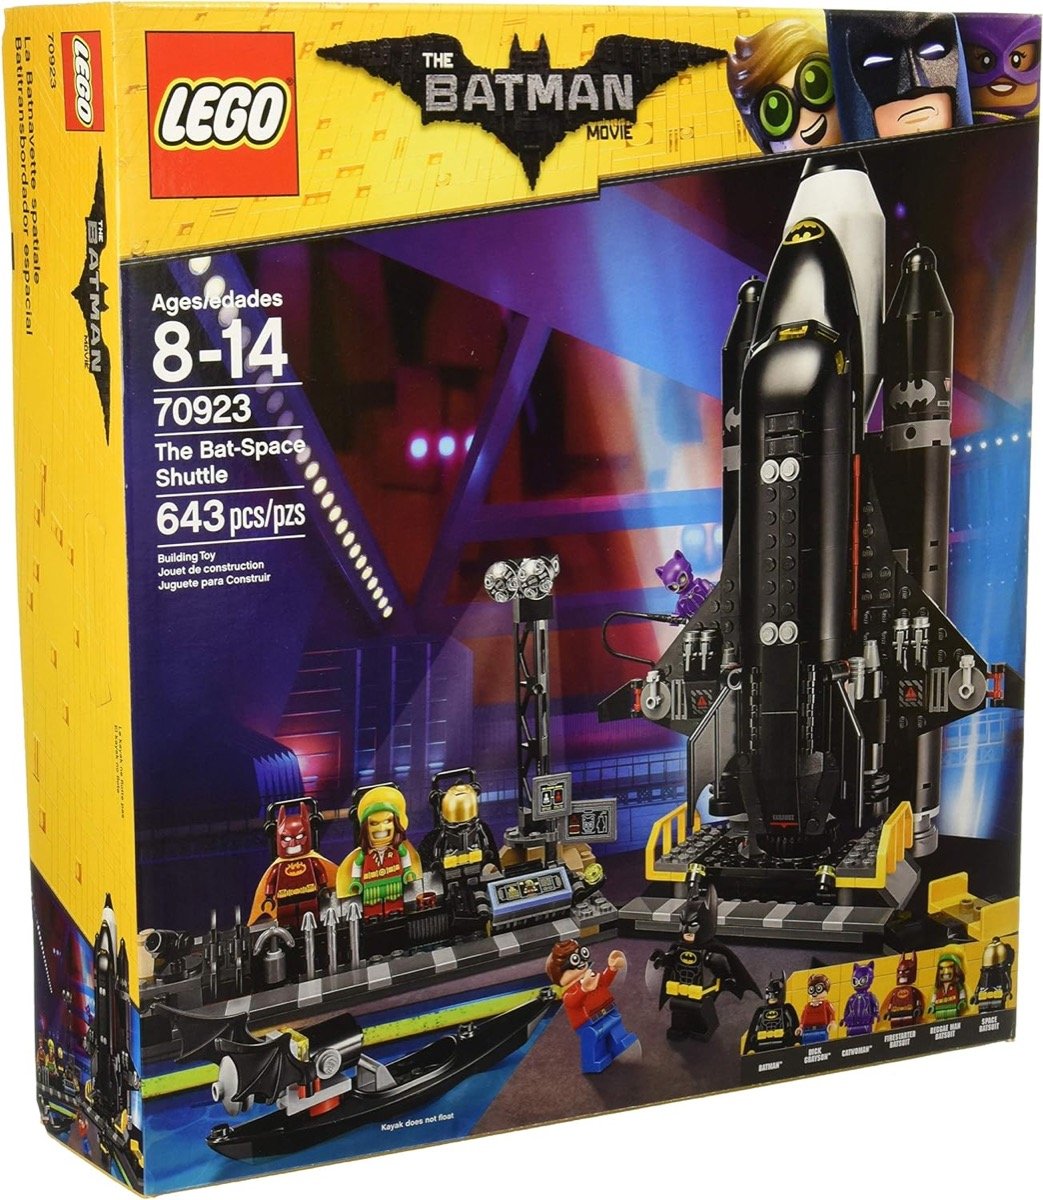 The Bat Space Shuttle LEGO set